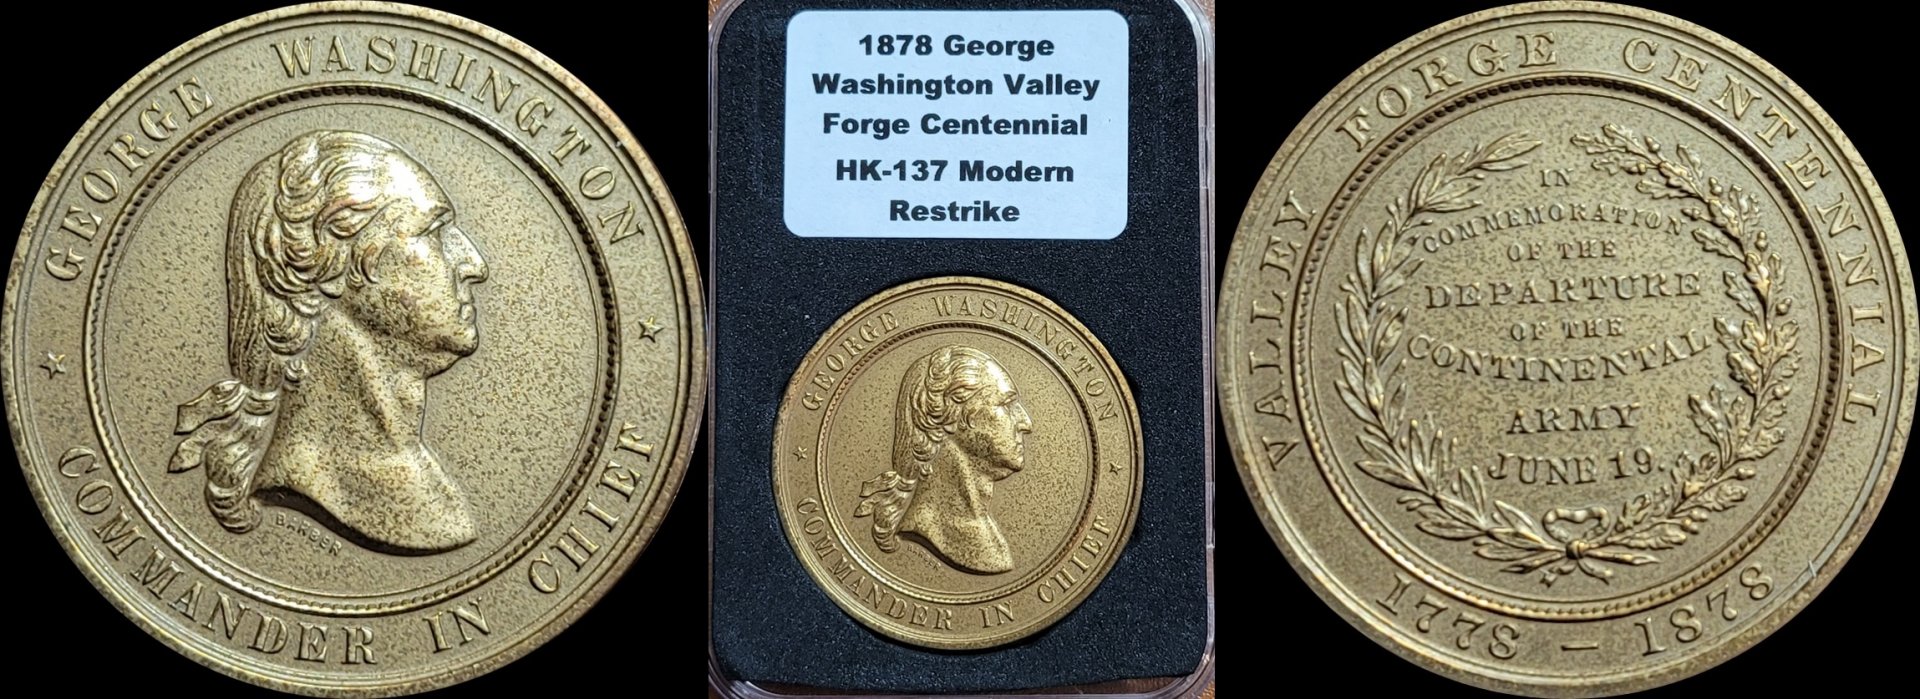 1878 George Washington Valley Forge Centennial 3-horz.jpg